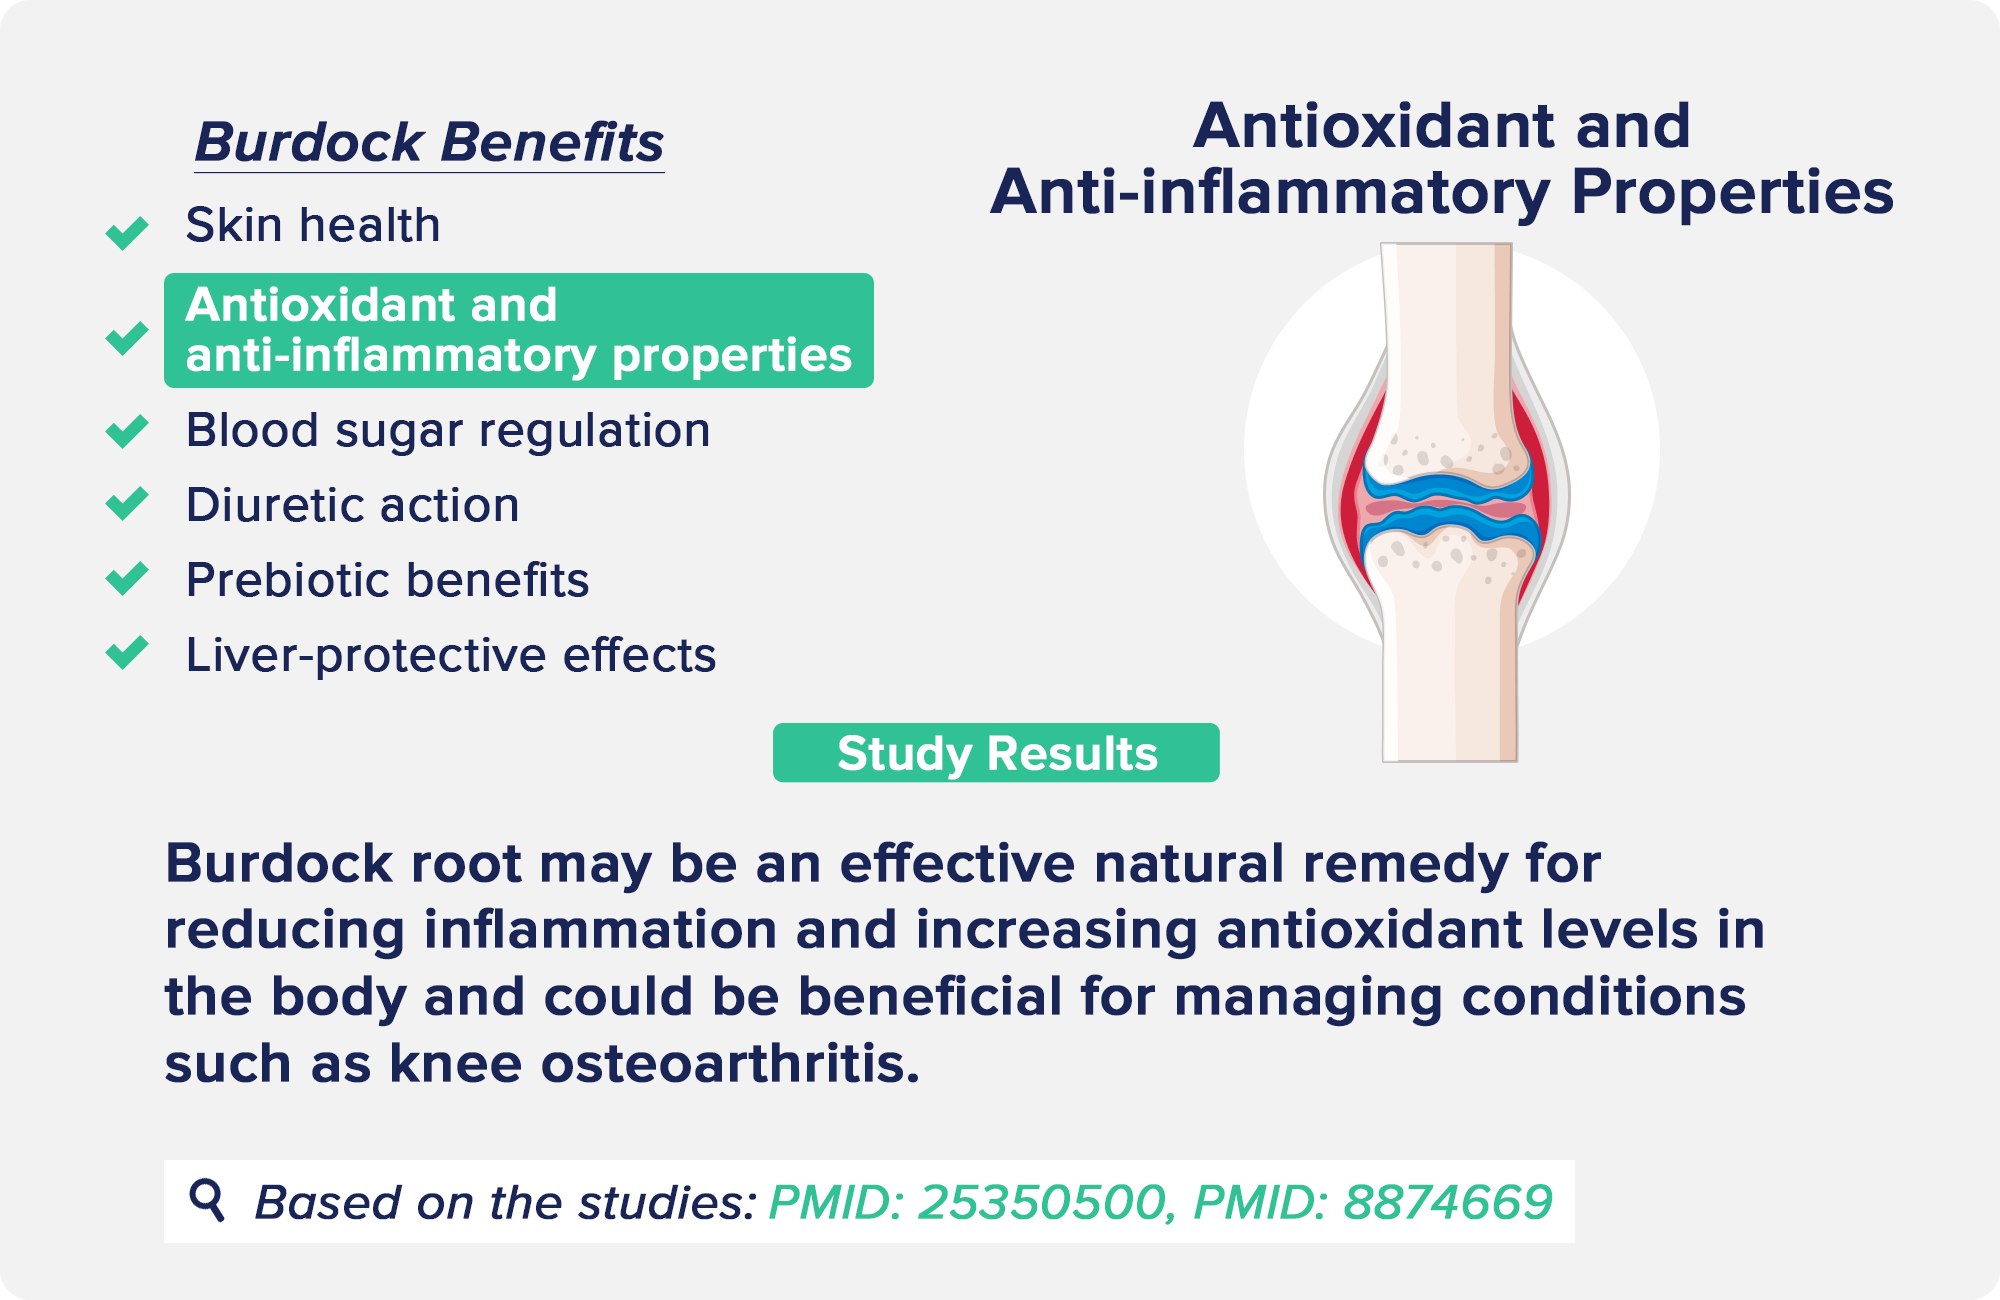 burdock benefits: Anti-Inflammatory and Antioxidant Properties